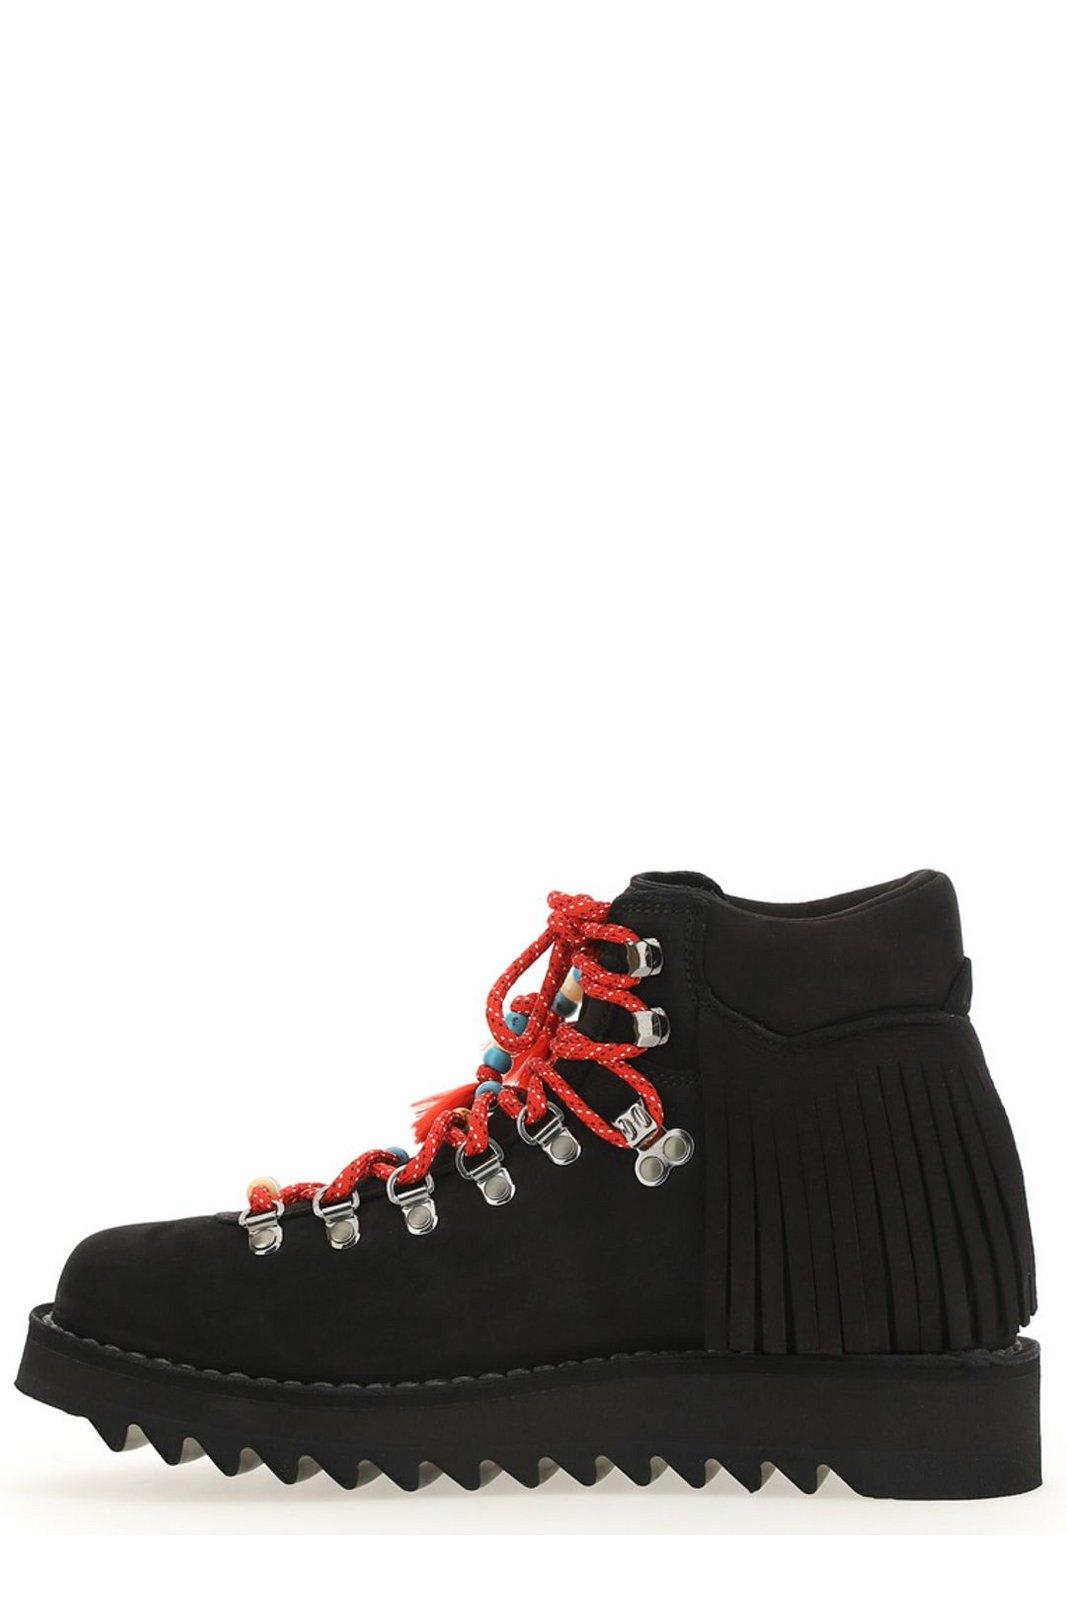 Alanui X Diemme Roccia Lace-up Boots In Black Black